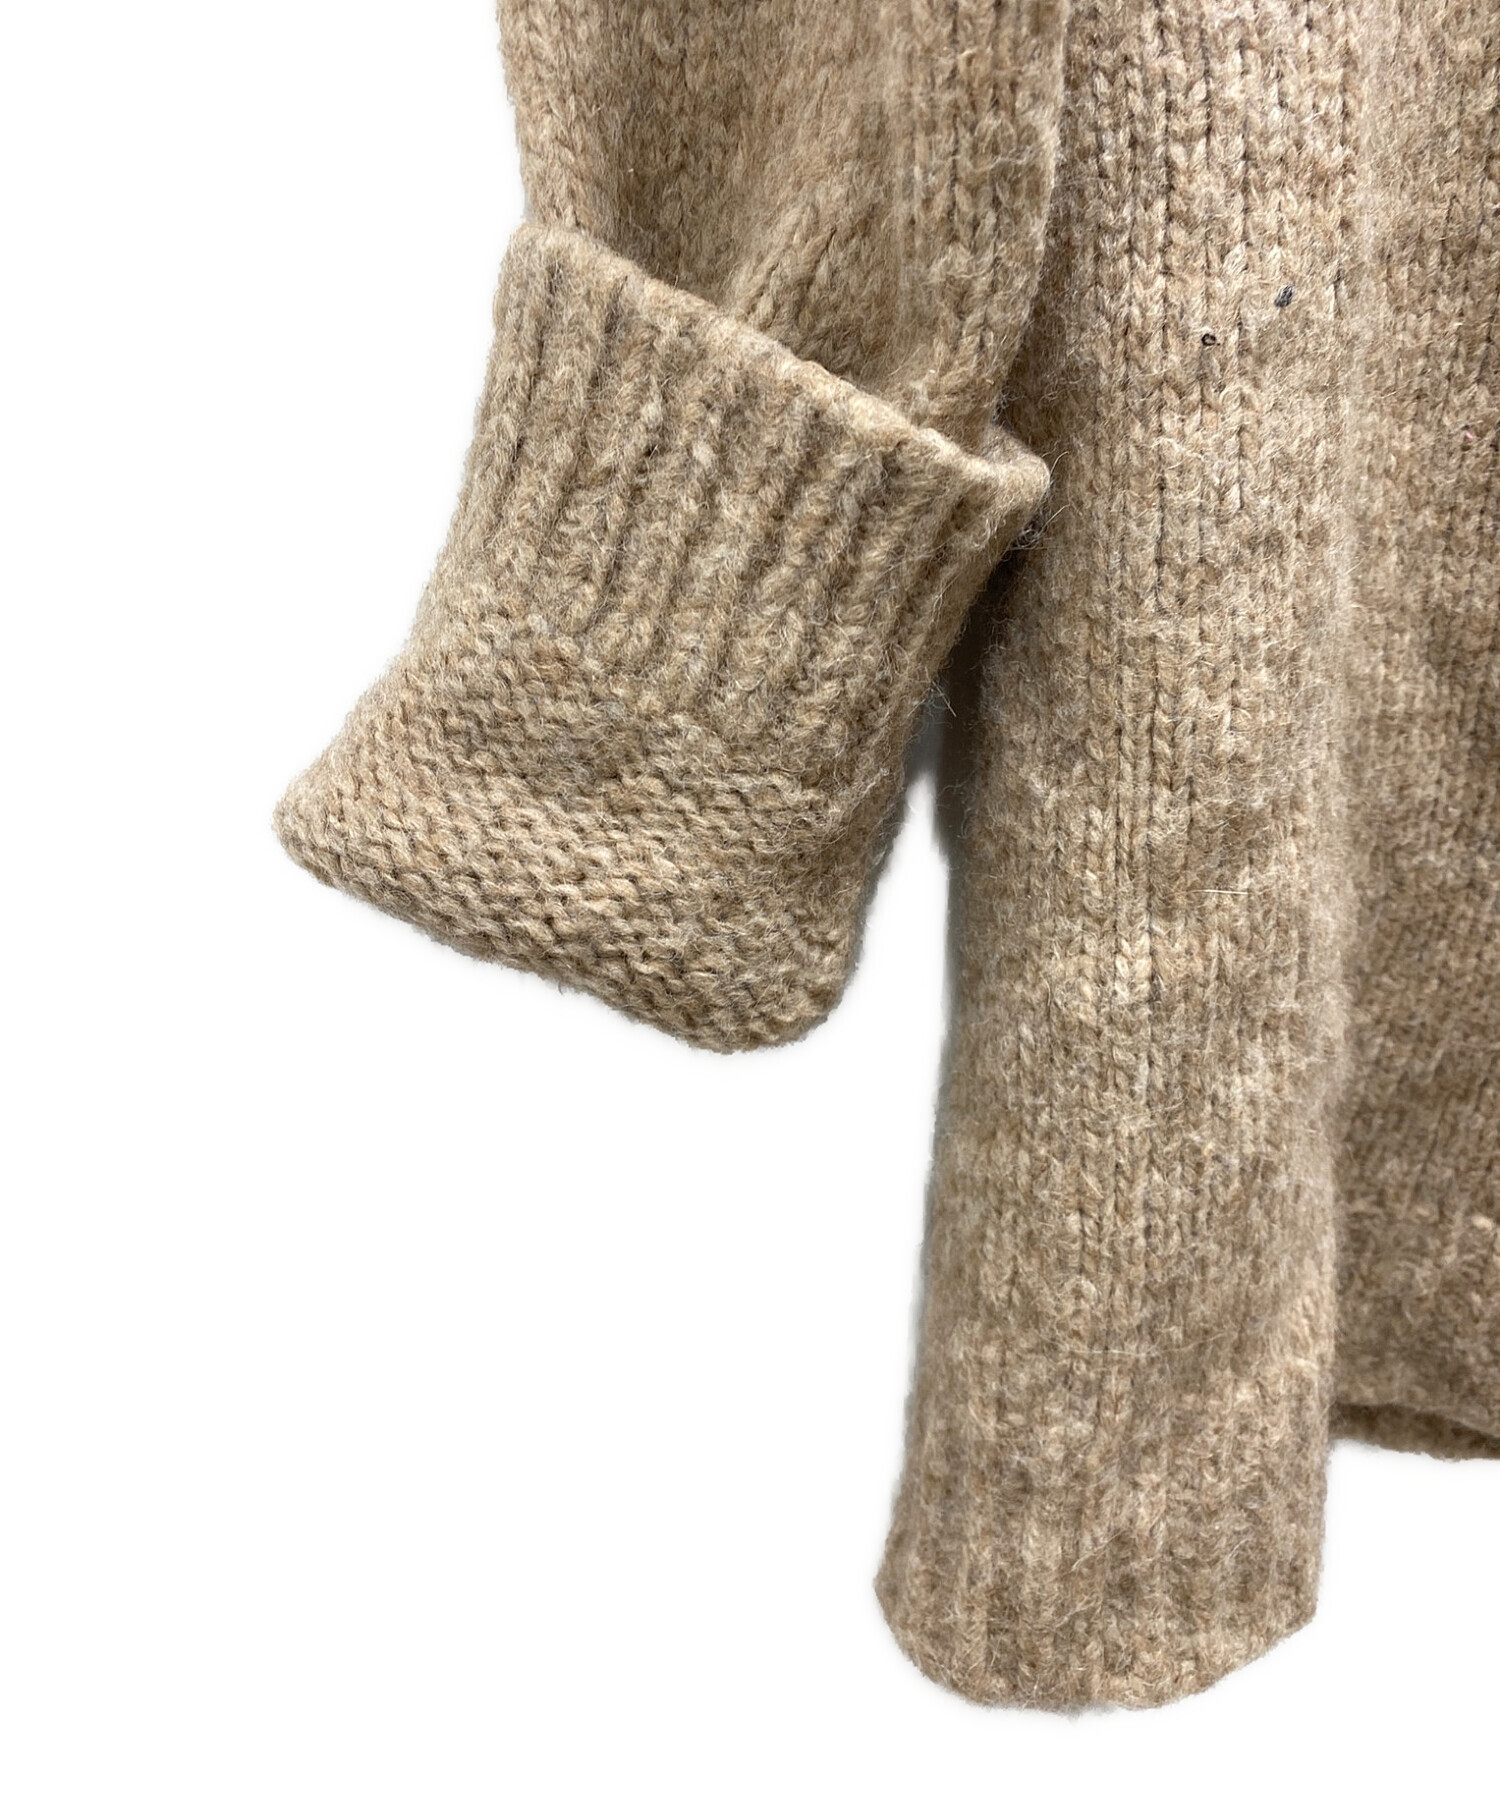 RAFSIMONS Roundneck jacquard sweater